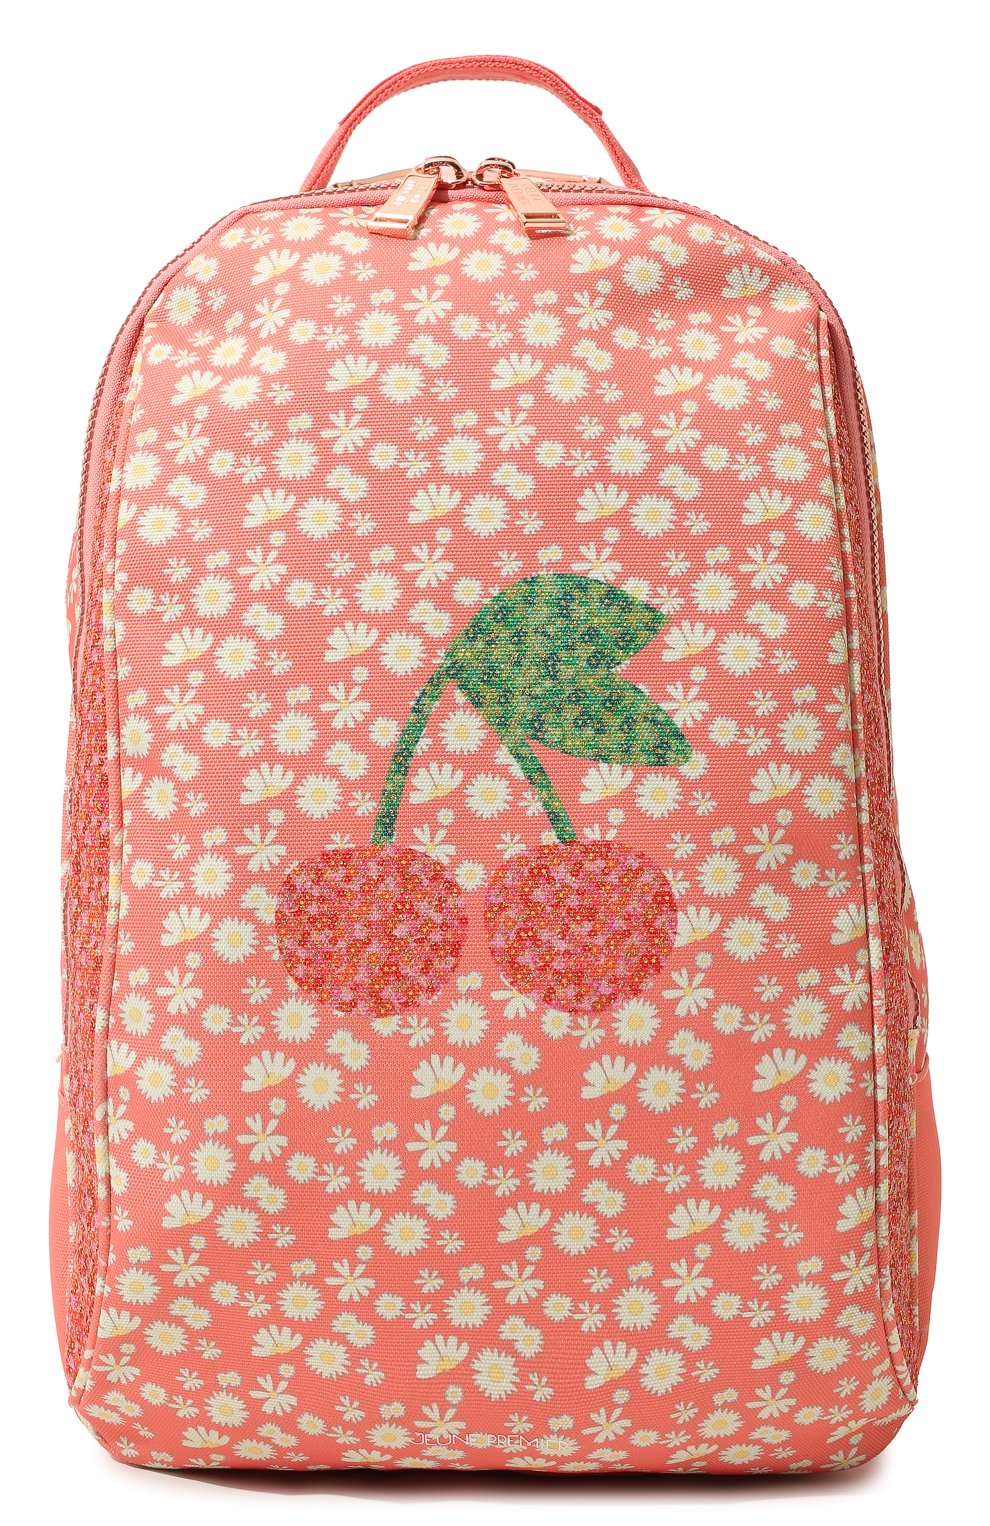 Детская рюкзак miss daisy JEUNE PREMIER розового цвета, арт. Bj021166 | Фото 1 (Материал: Текстиль)